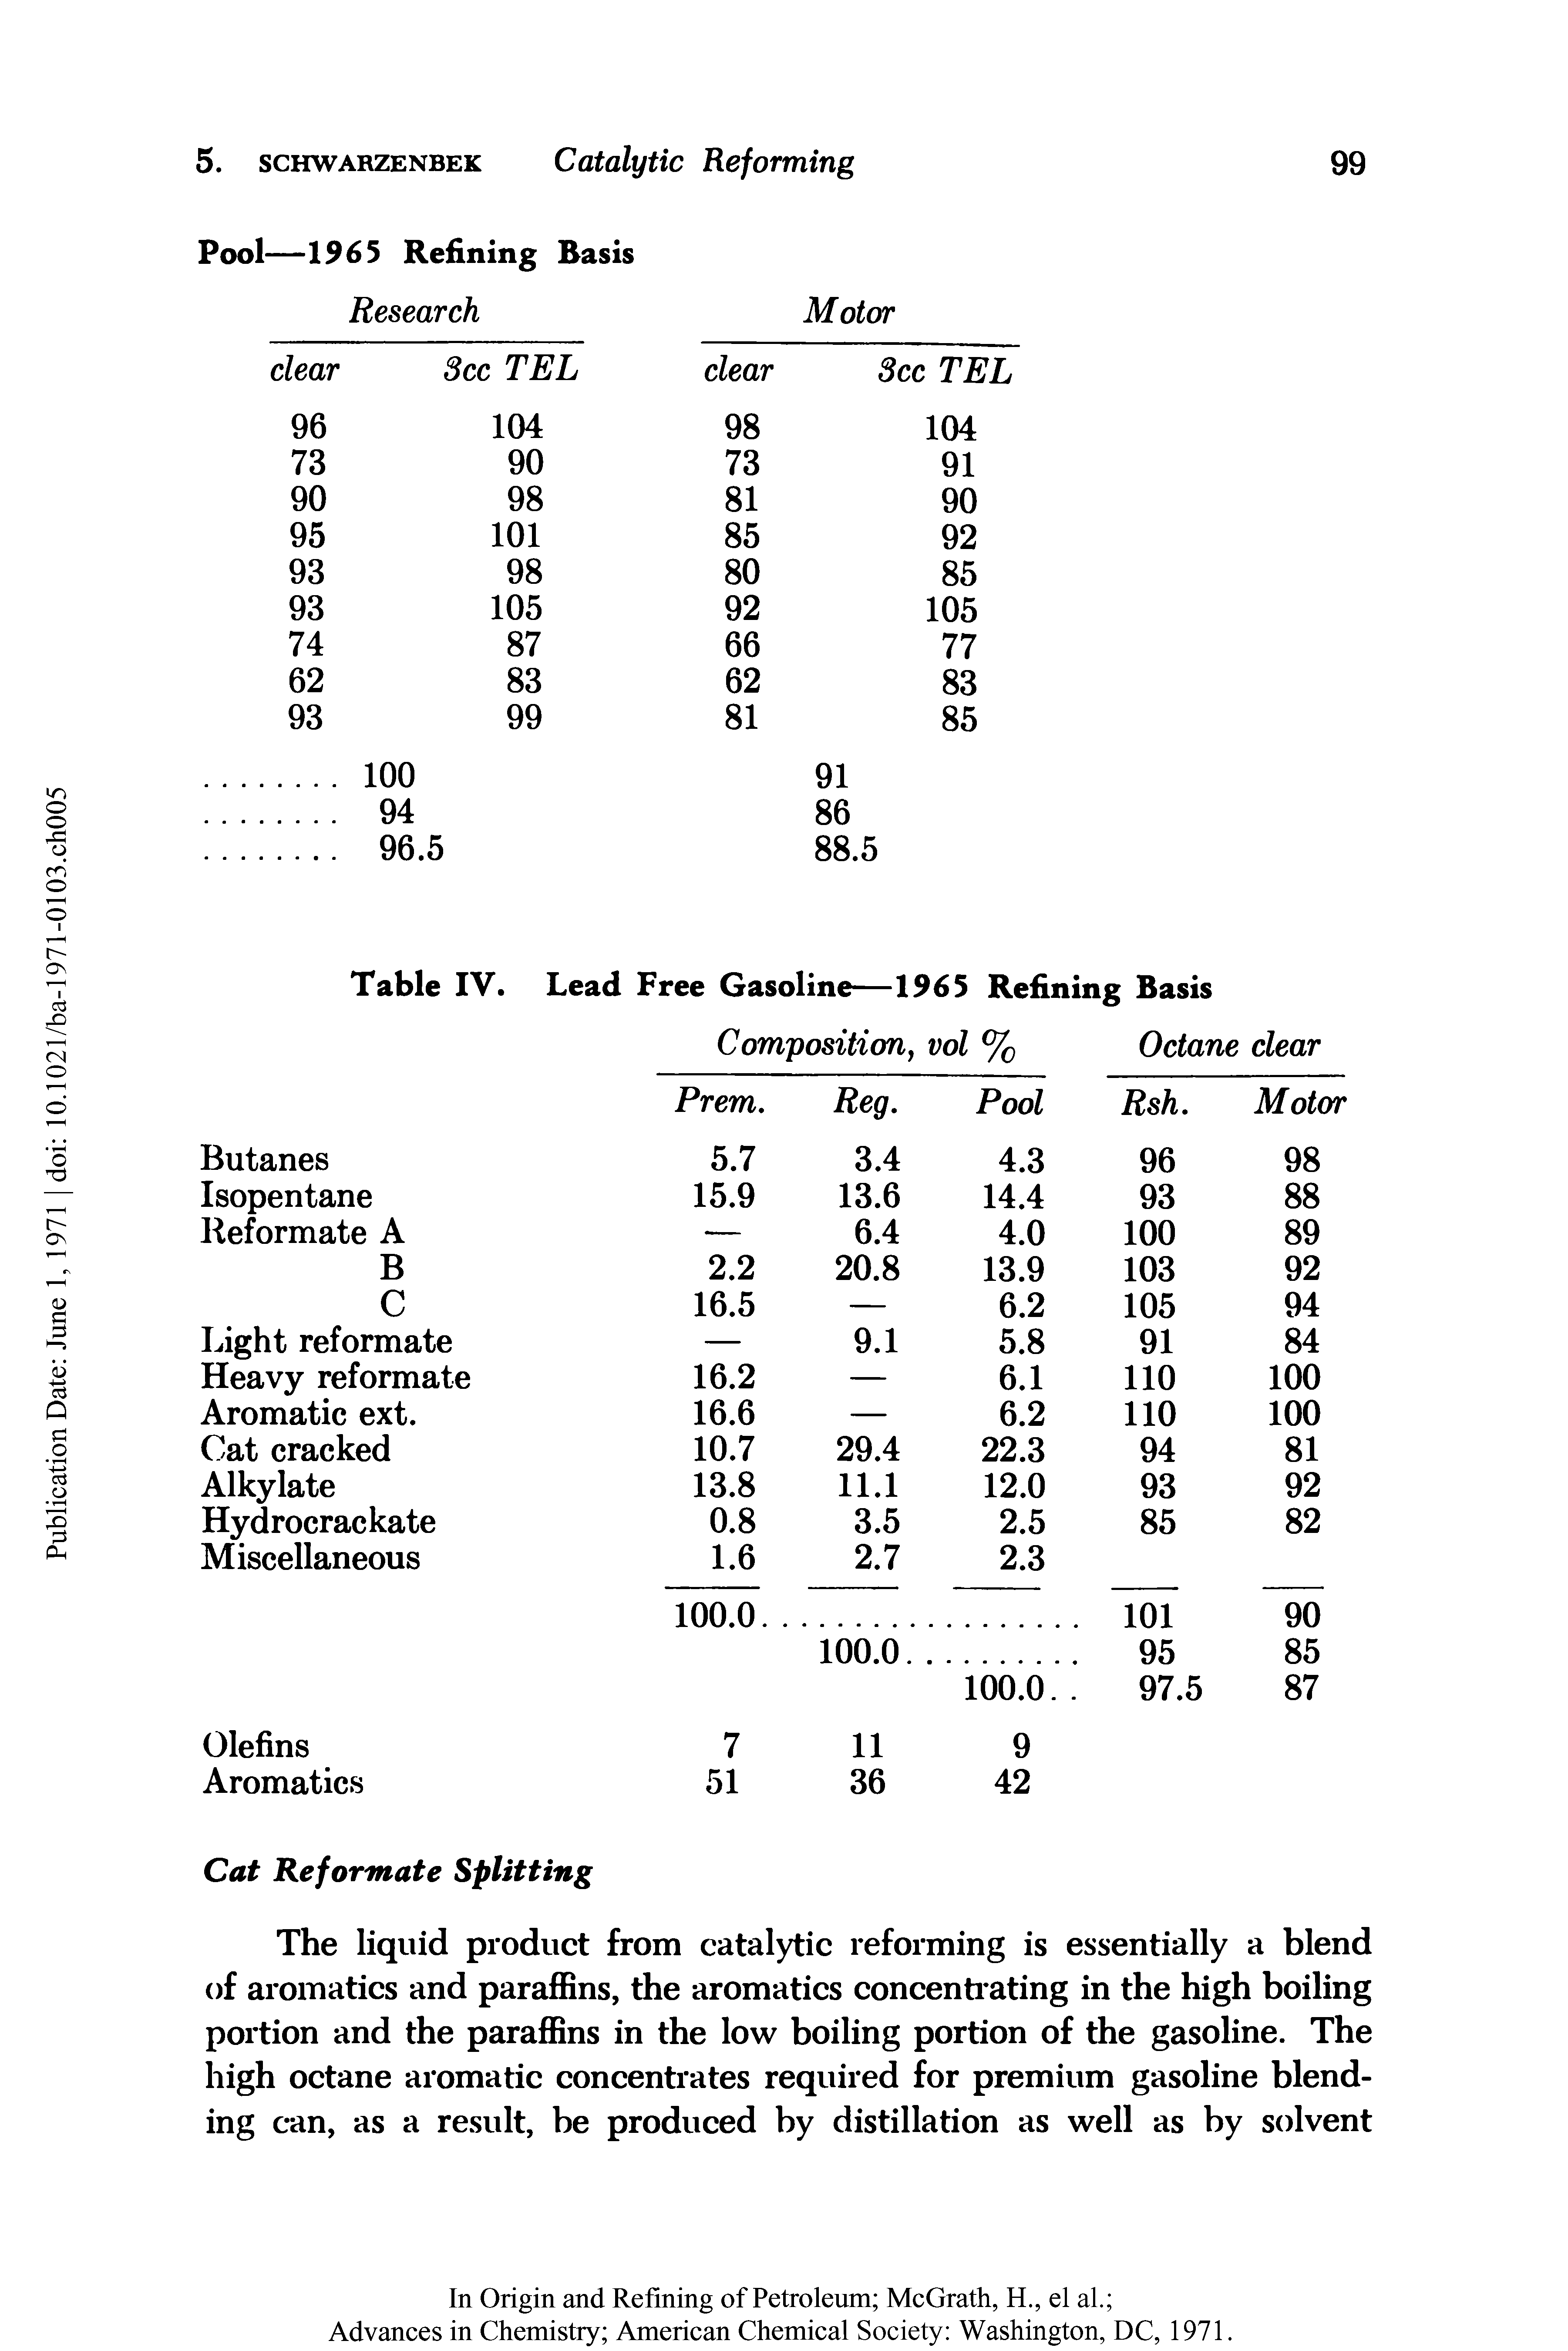 Table IV. Lead Free Gasoline—1965 Refining Basis...